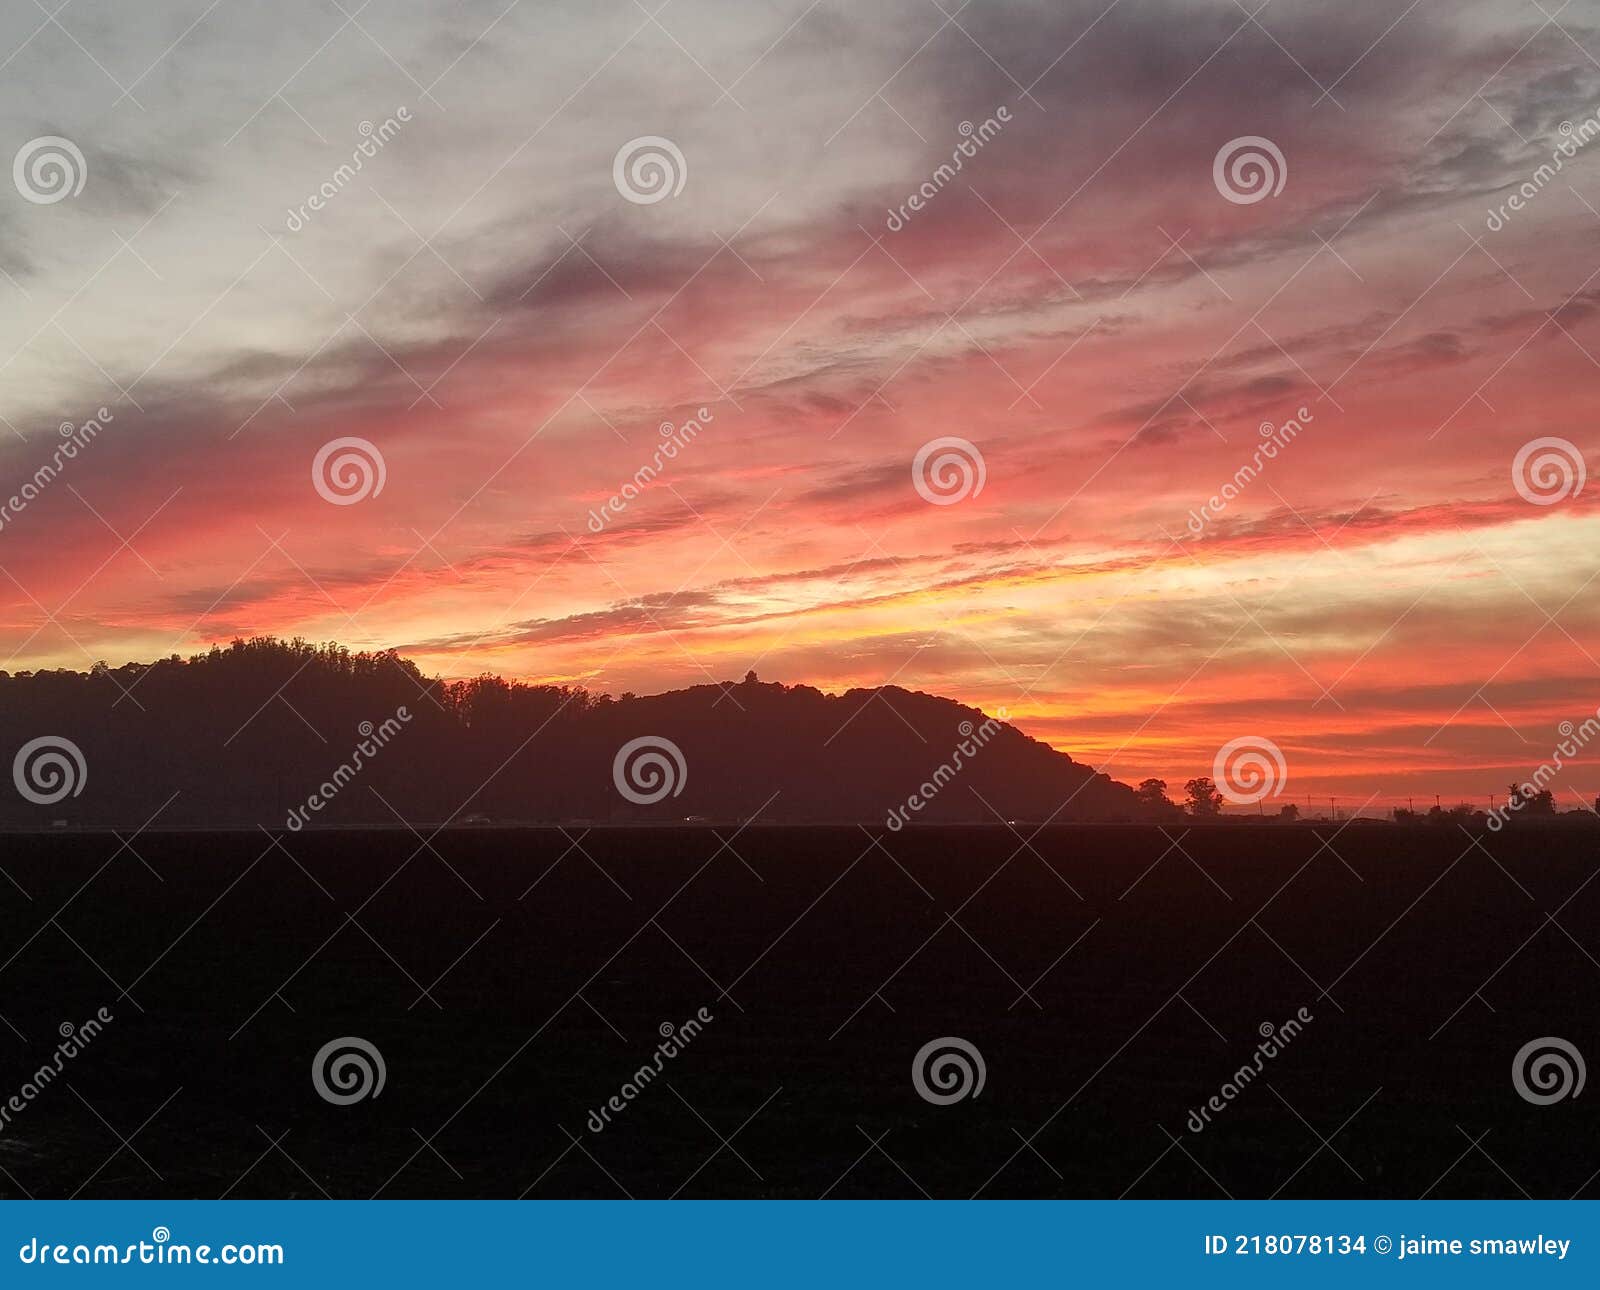 sunset pajaro valley california march2020